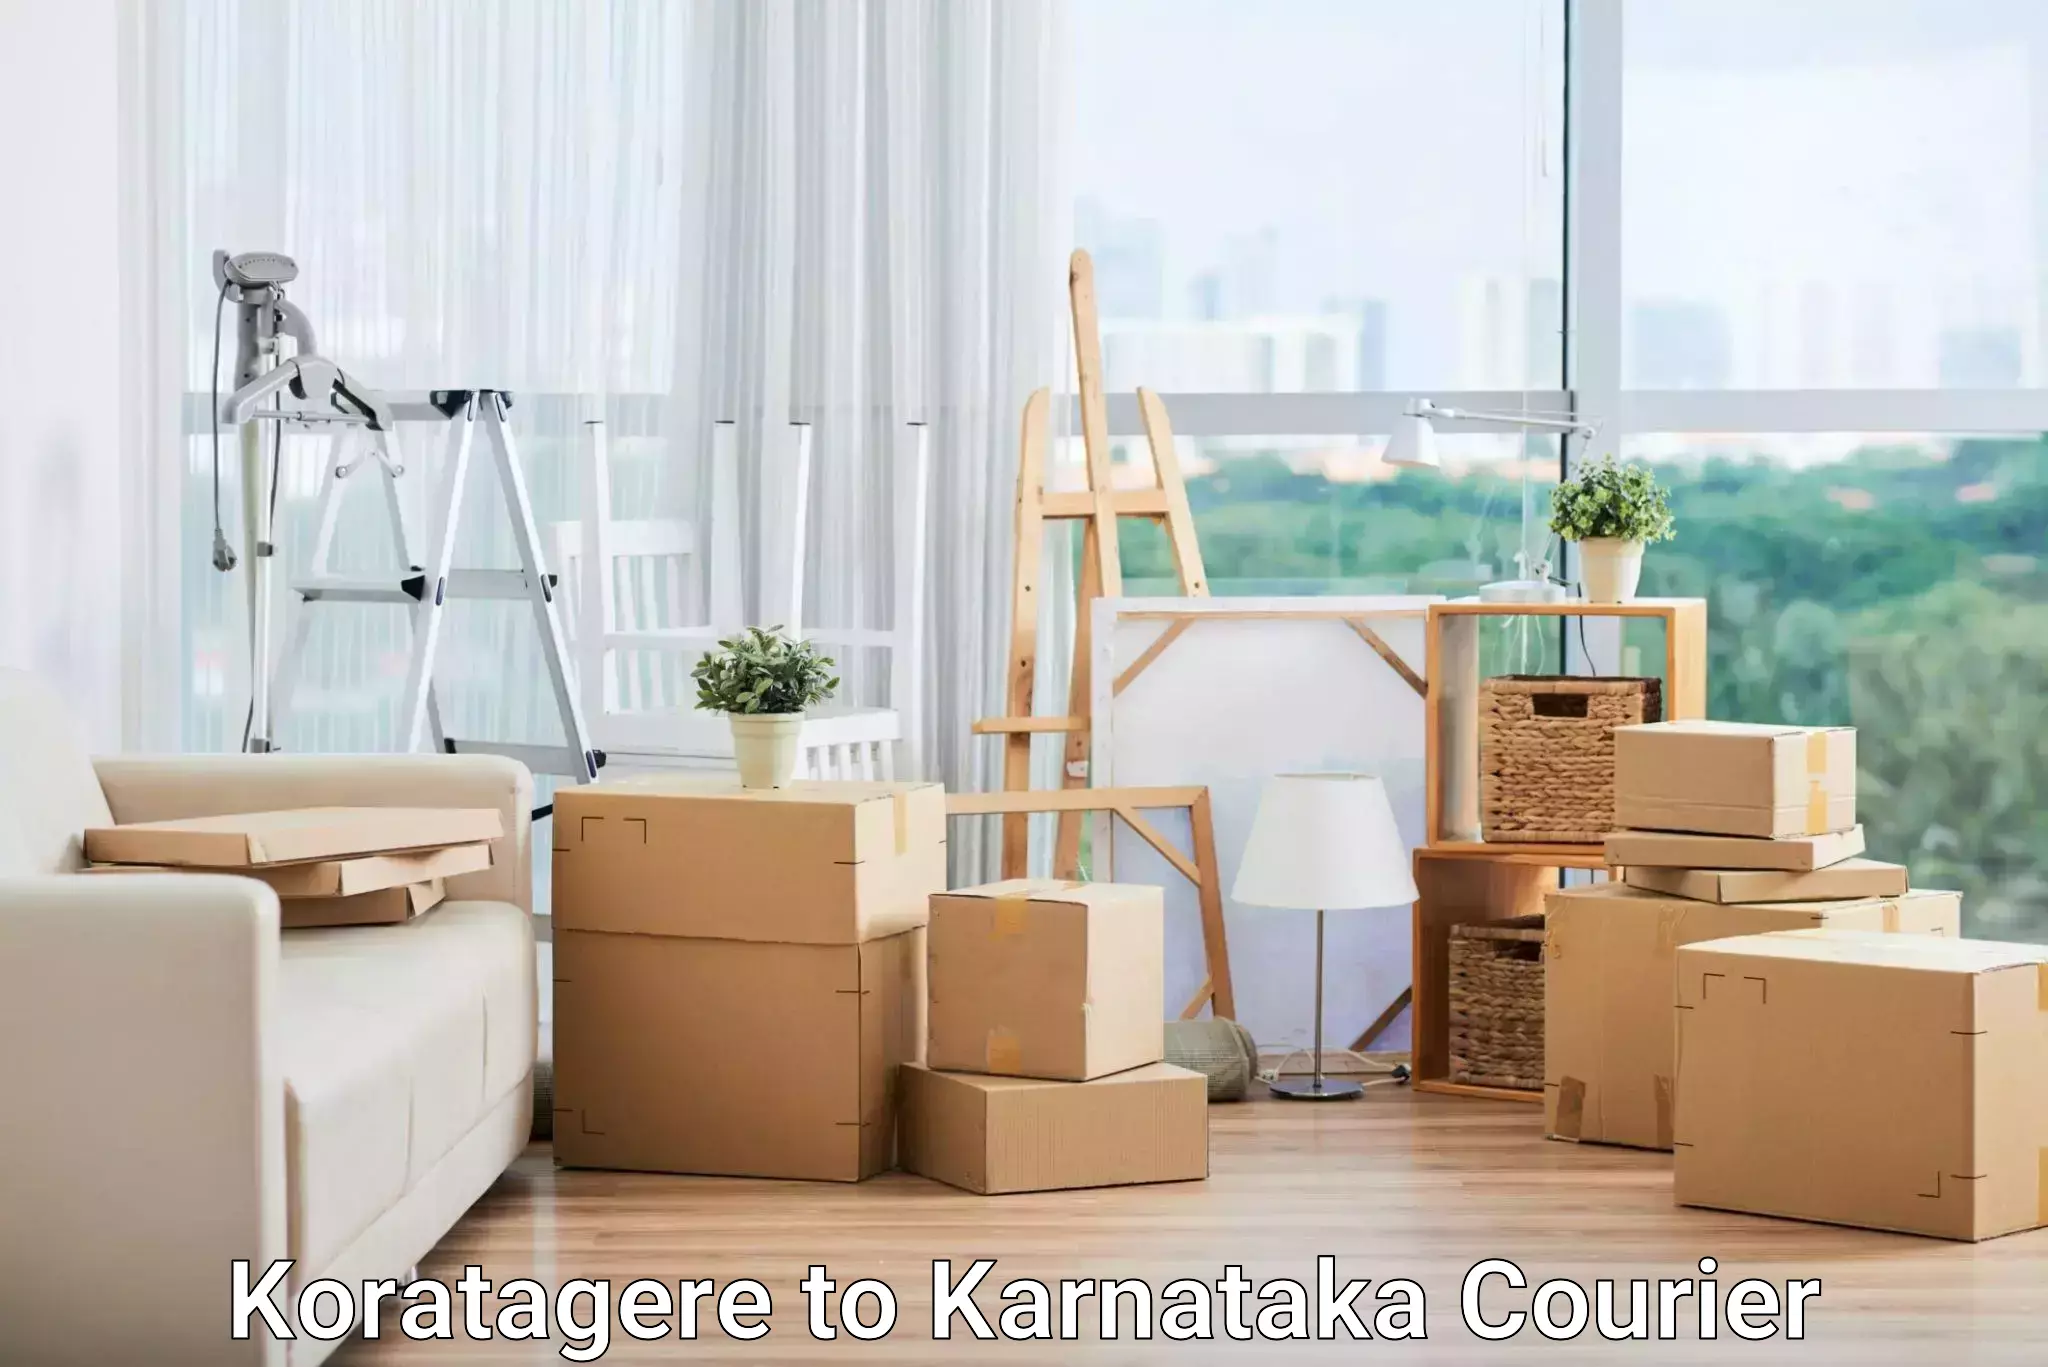 Package delivery network Koratagere to Karnataka